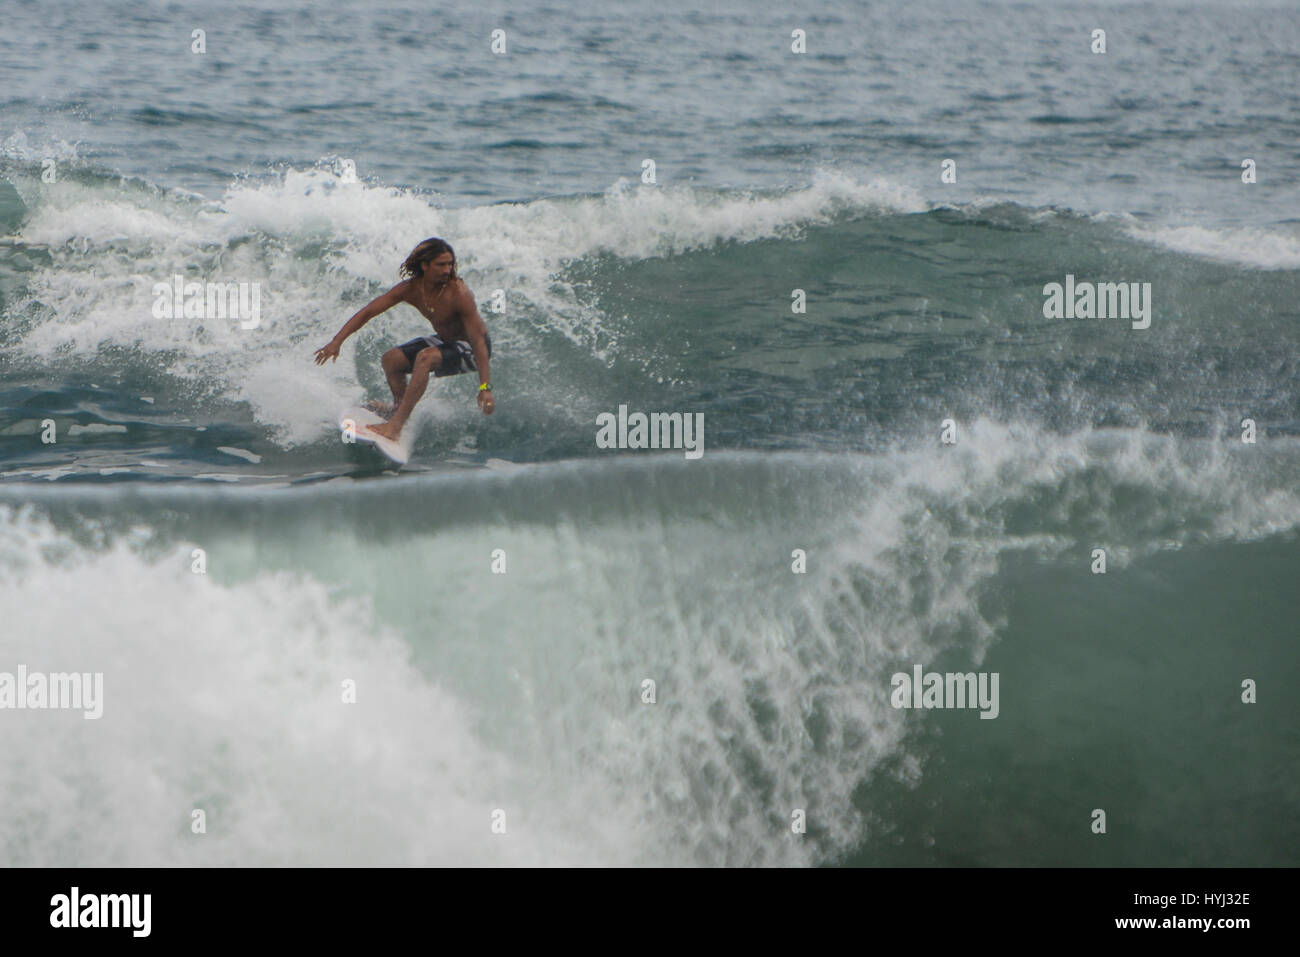 Carlos, 'Cali', Muñoz surfs the waves at Playa Hermosa on Costa Rica's Pacific Coast. Stock Photo